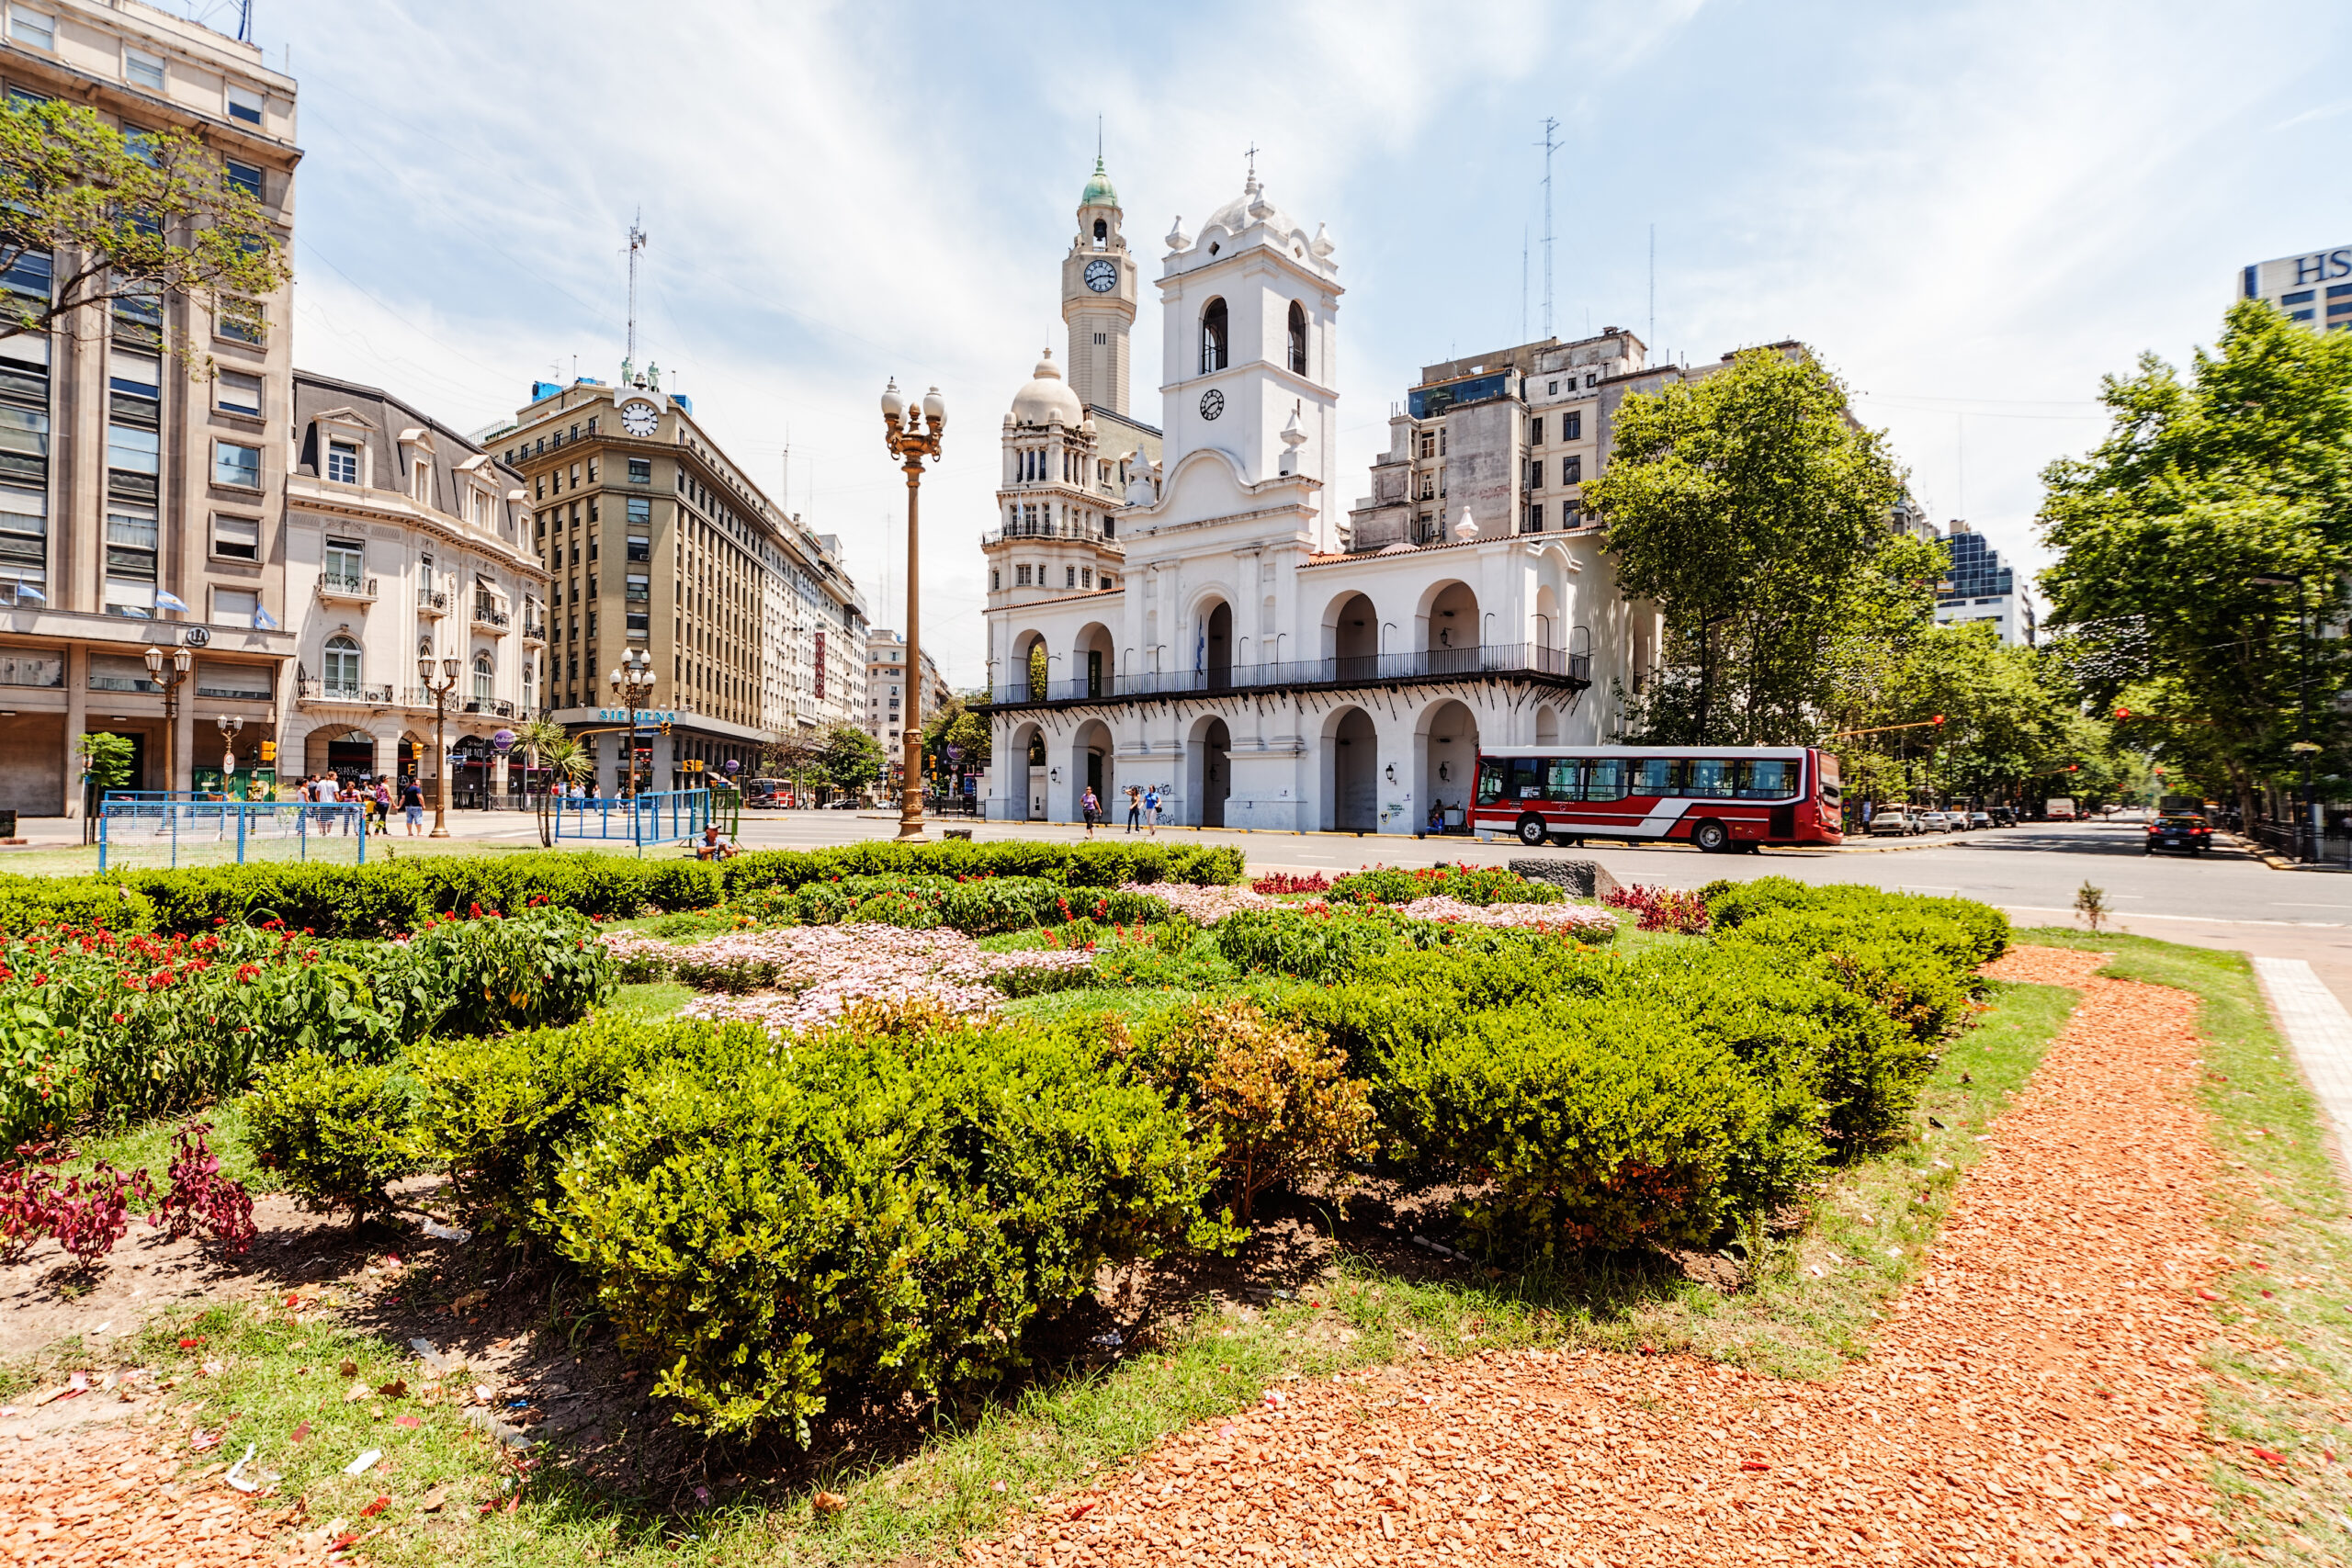 The Buenos Aires Cabildo located in Plaza de Mayo